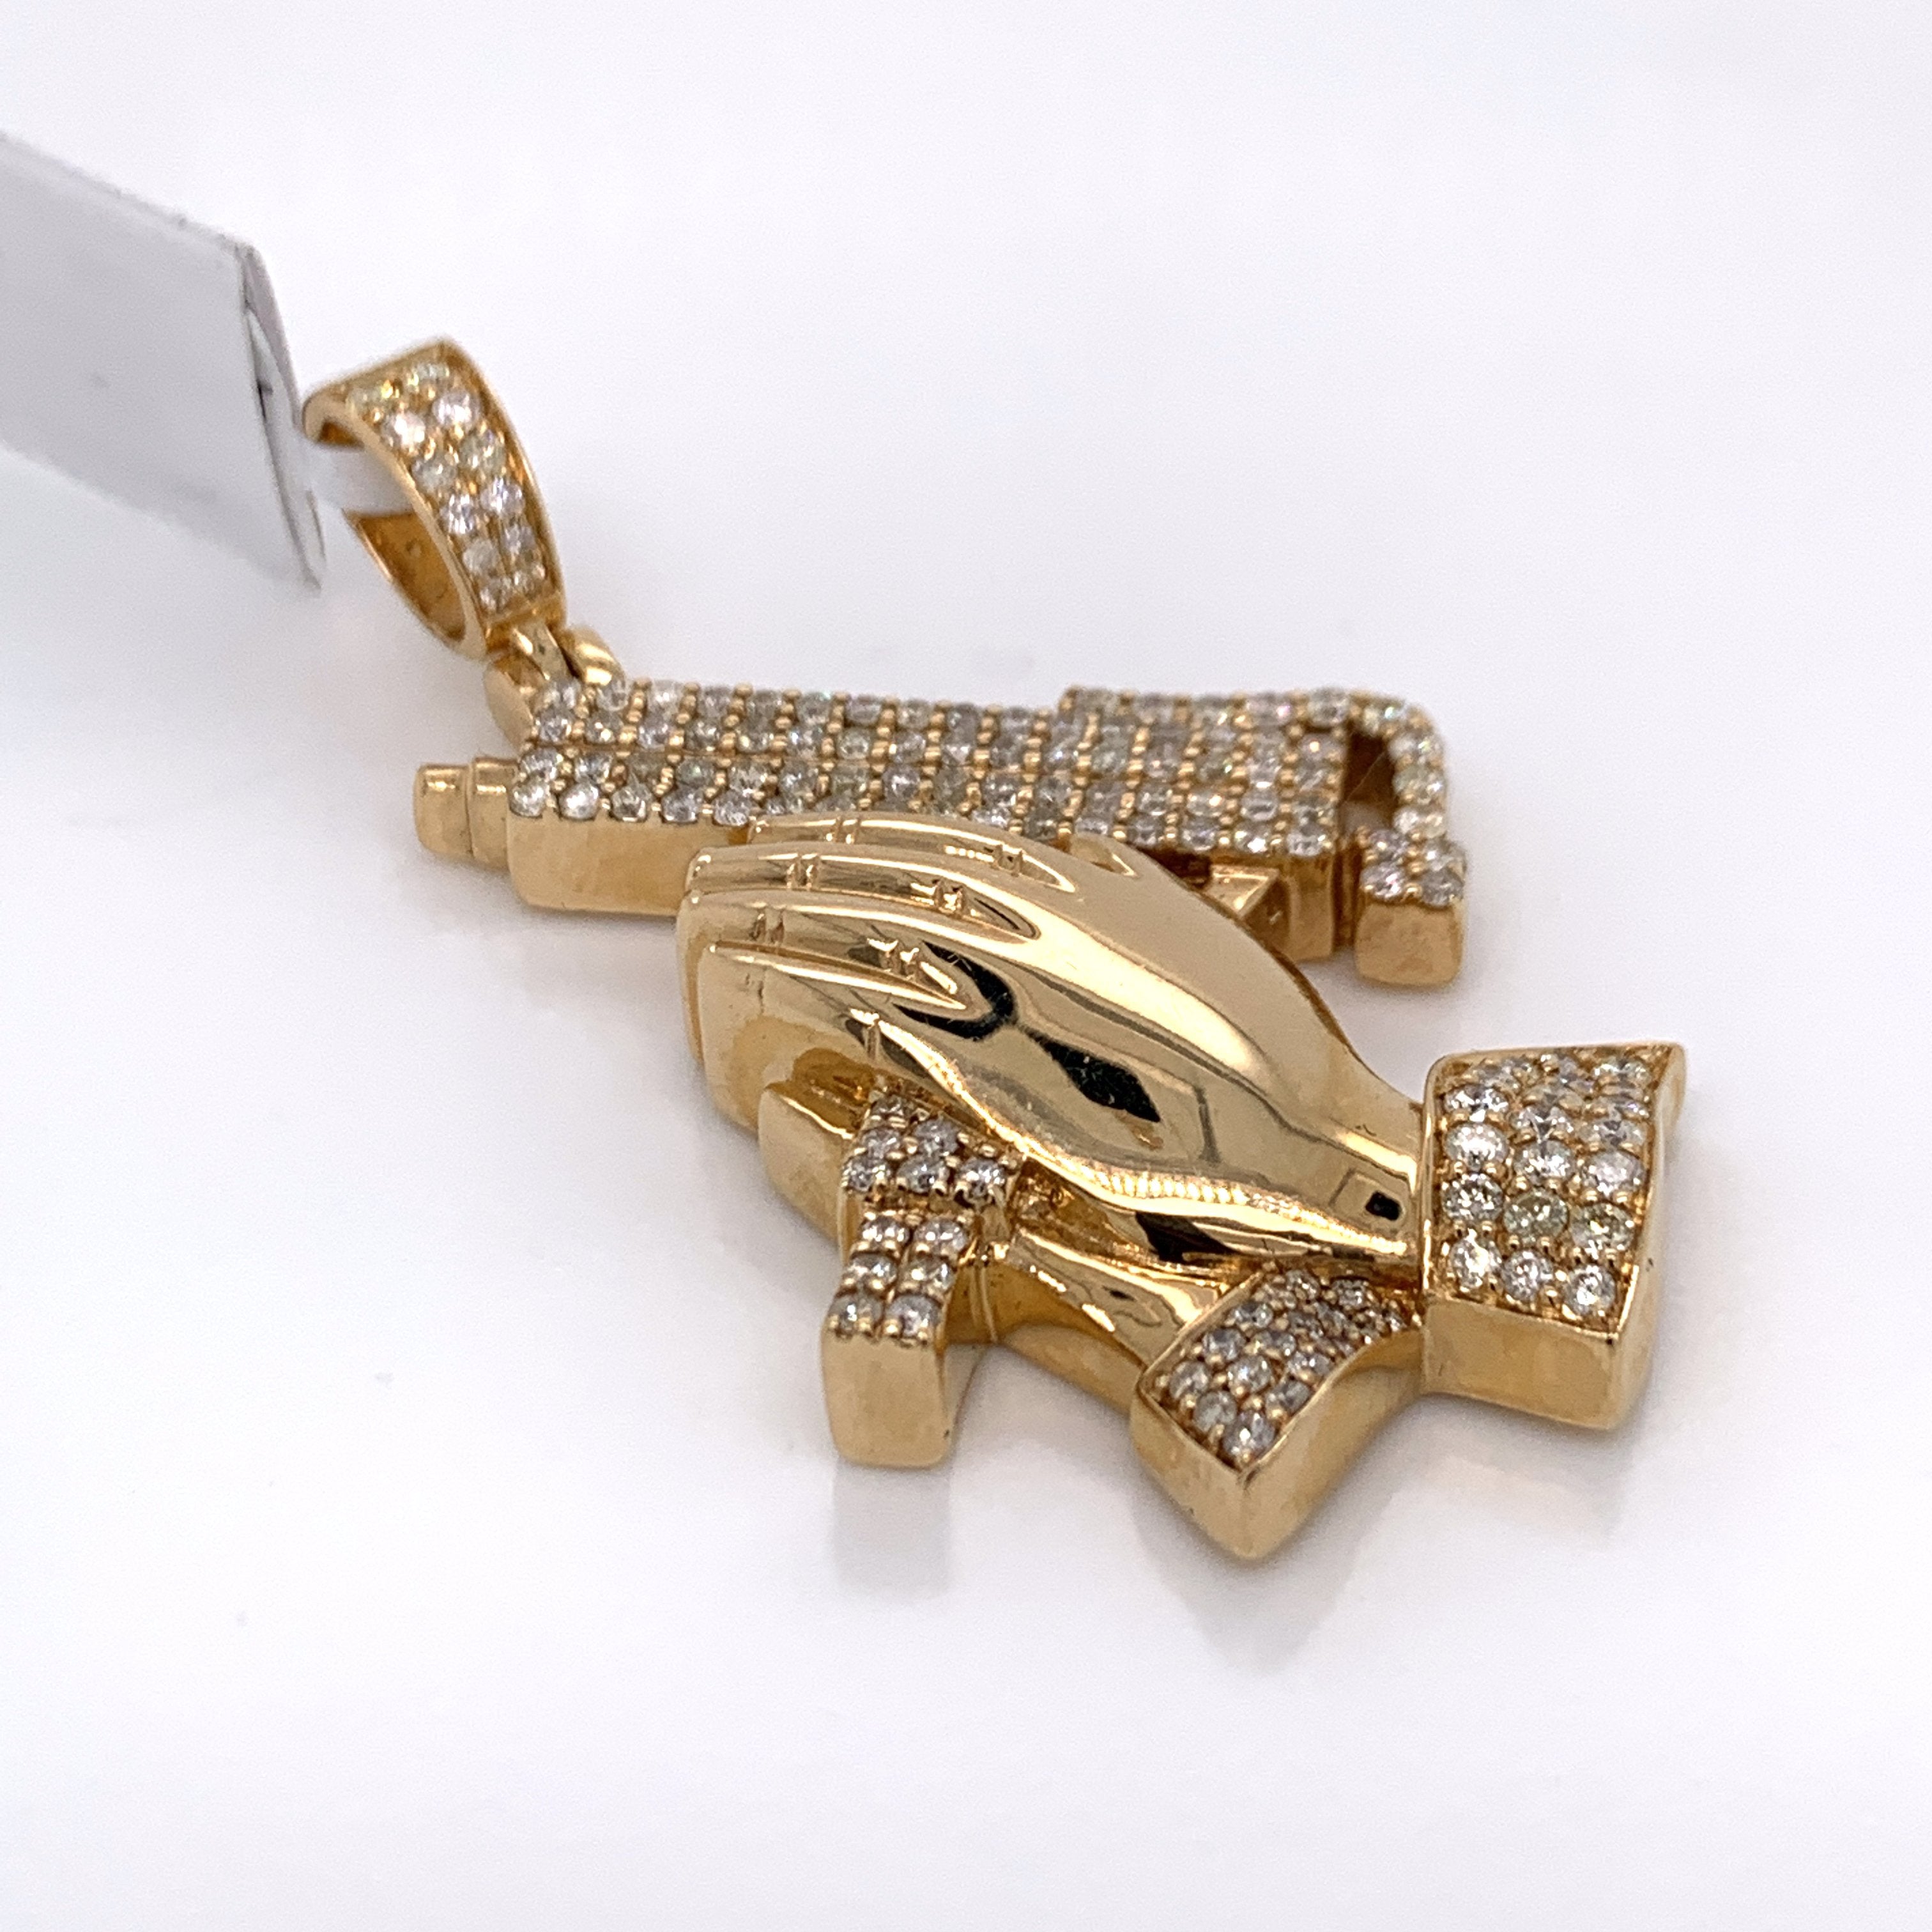 2.00CT Prayer Hands with Weapon Diamond Pendant in 14K Gold - White Carat Diamonds 